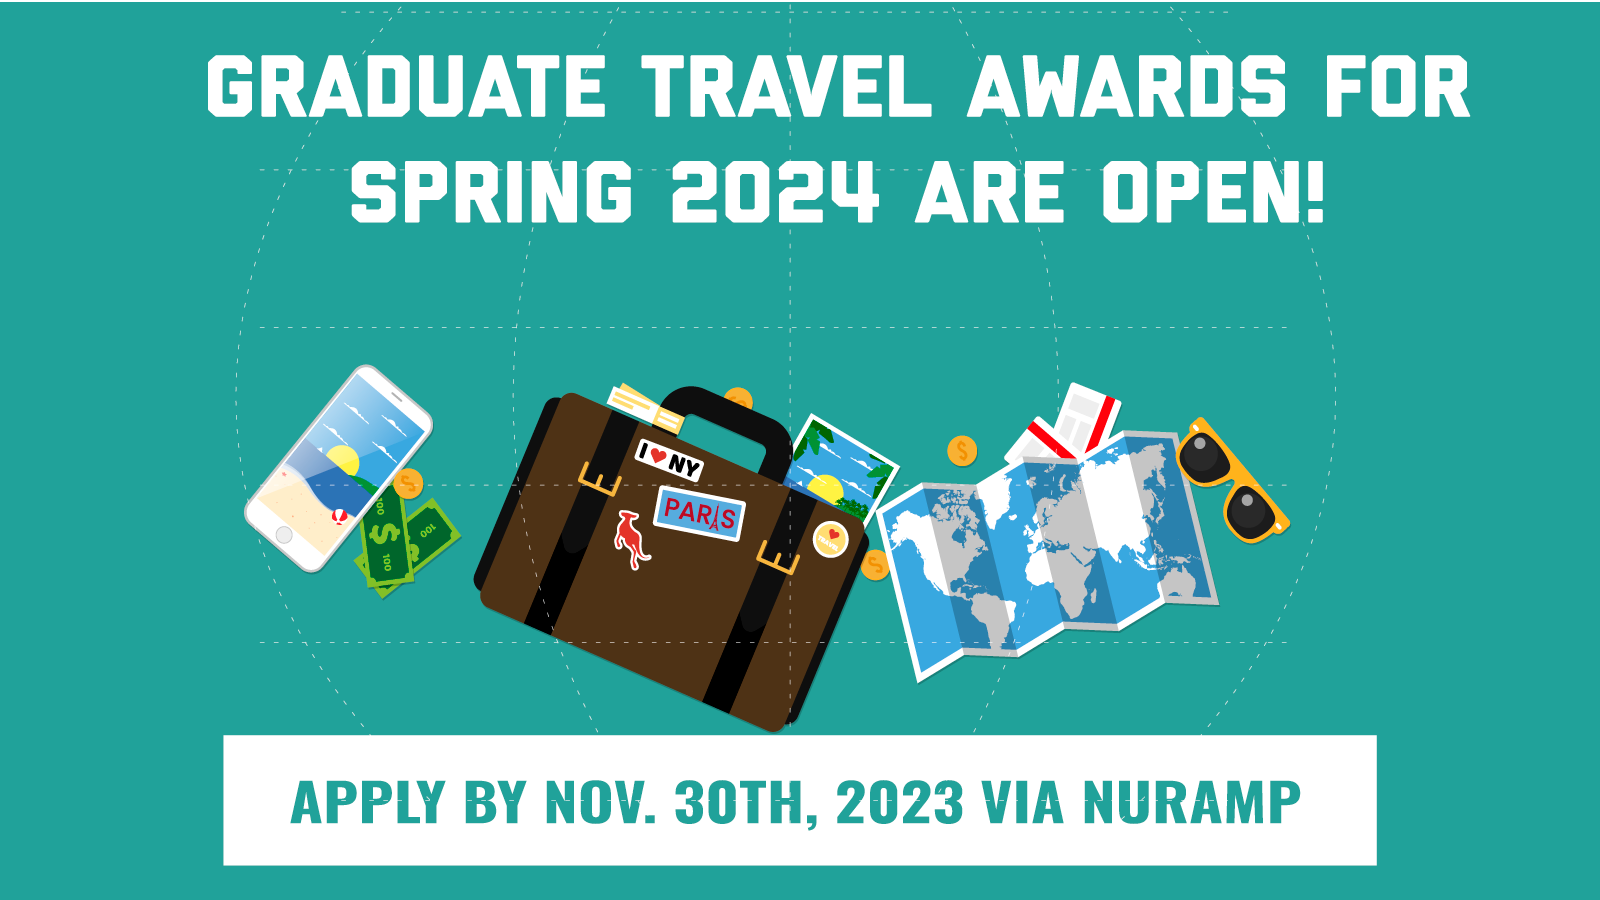 Graduate Travel Awards for Spring 2024 are open! Apply by November 30th via NuRamp